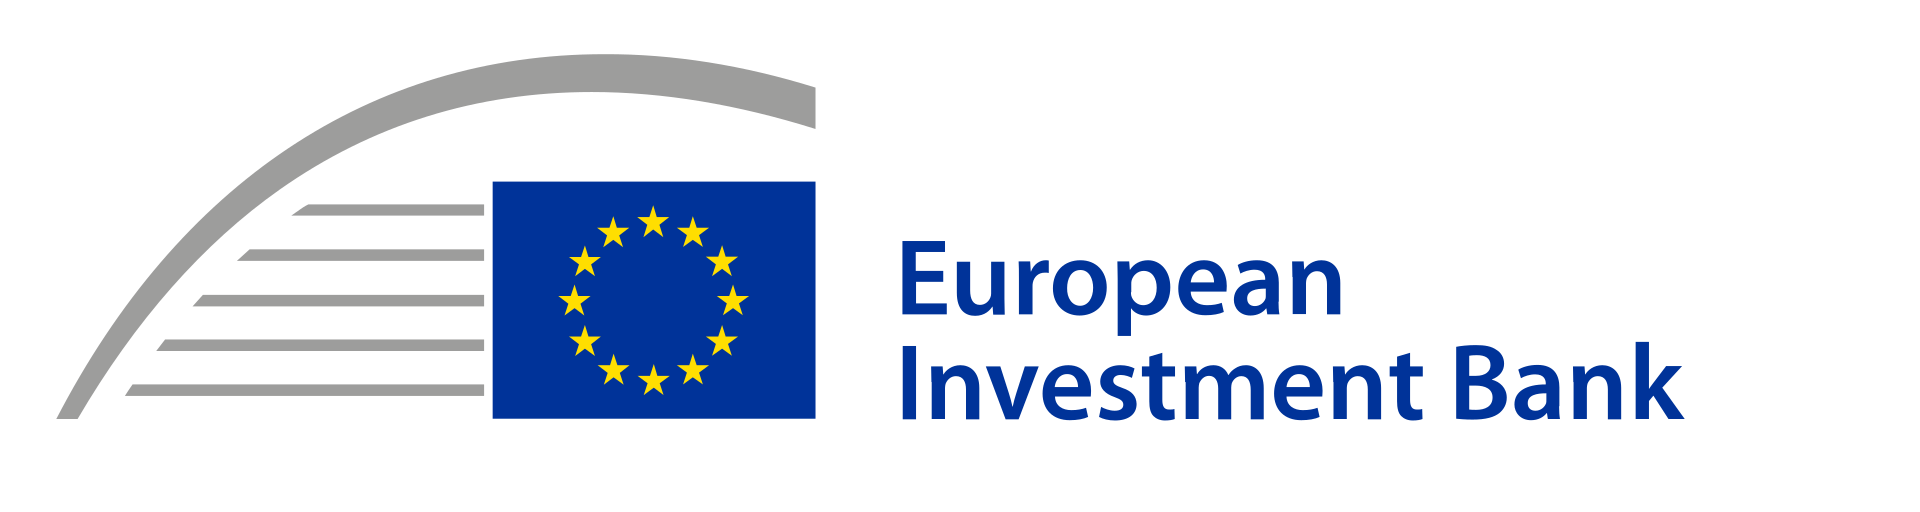 European investment Bank лого. Кокошник с узорами рисунок 2 класс. Логотип EIB. Европейский инвестиционный банк